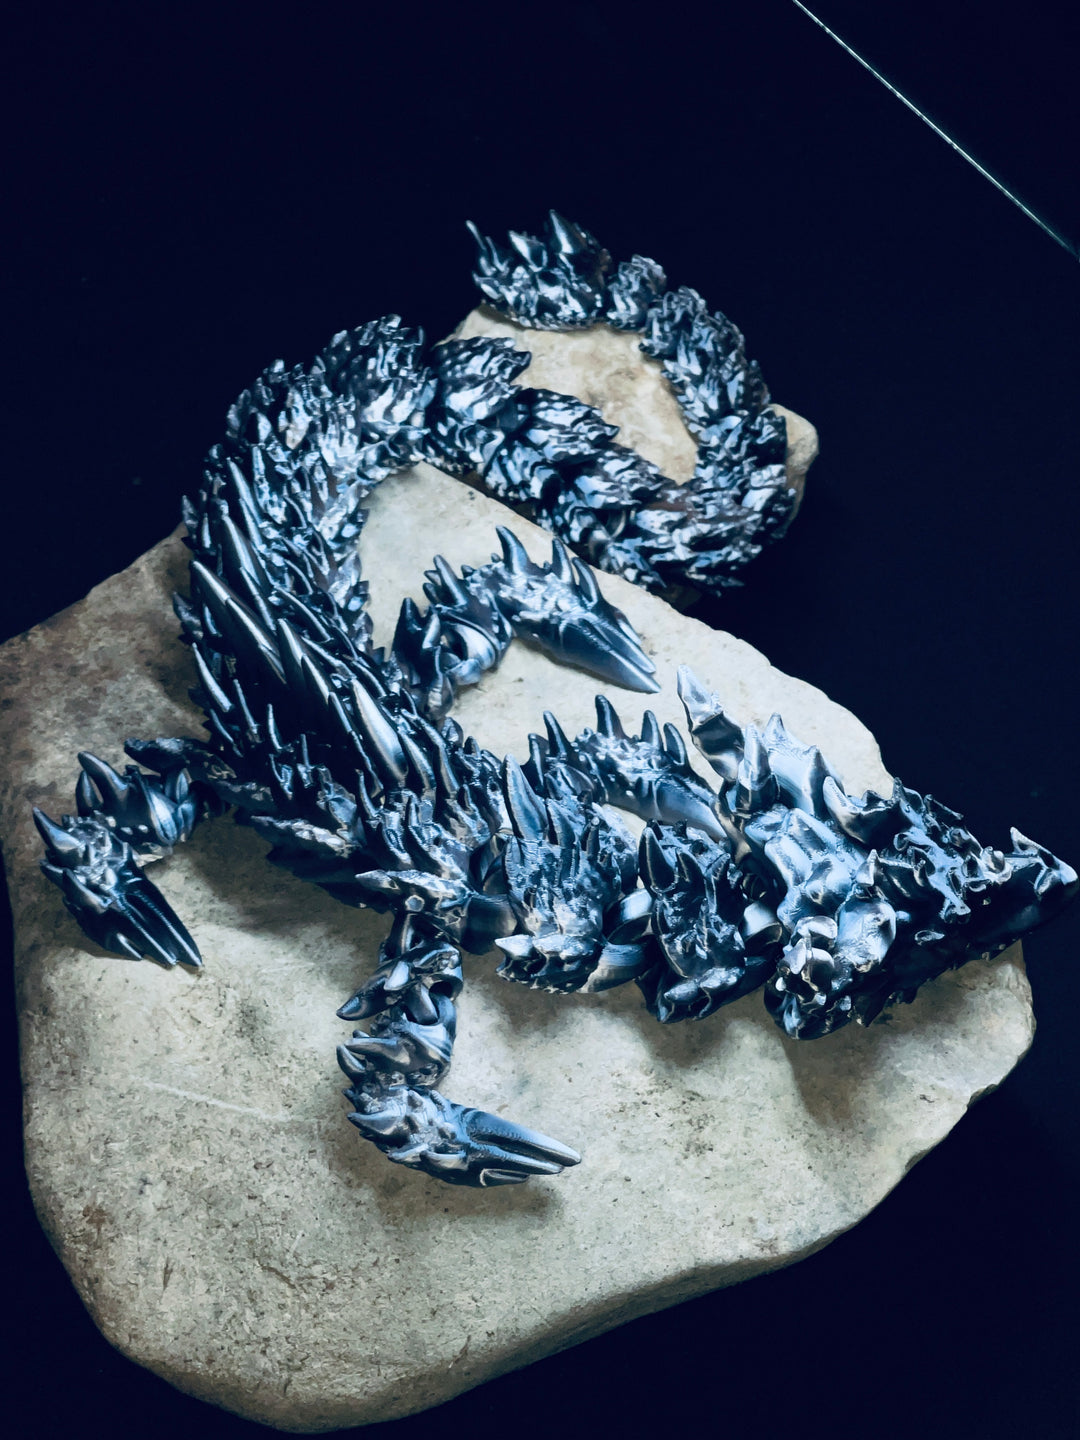 Adult Desert Dragon, Articulated 3D Printed Dragon, Flexible 3D Dragon Figure Sculpture